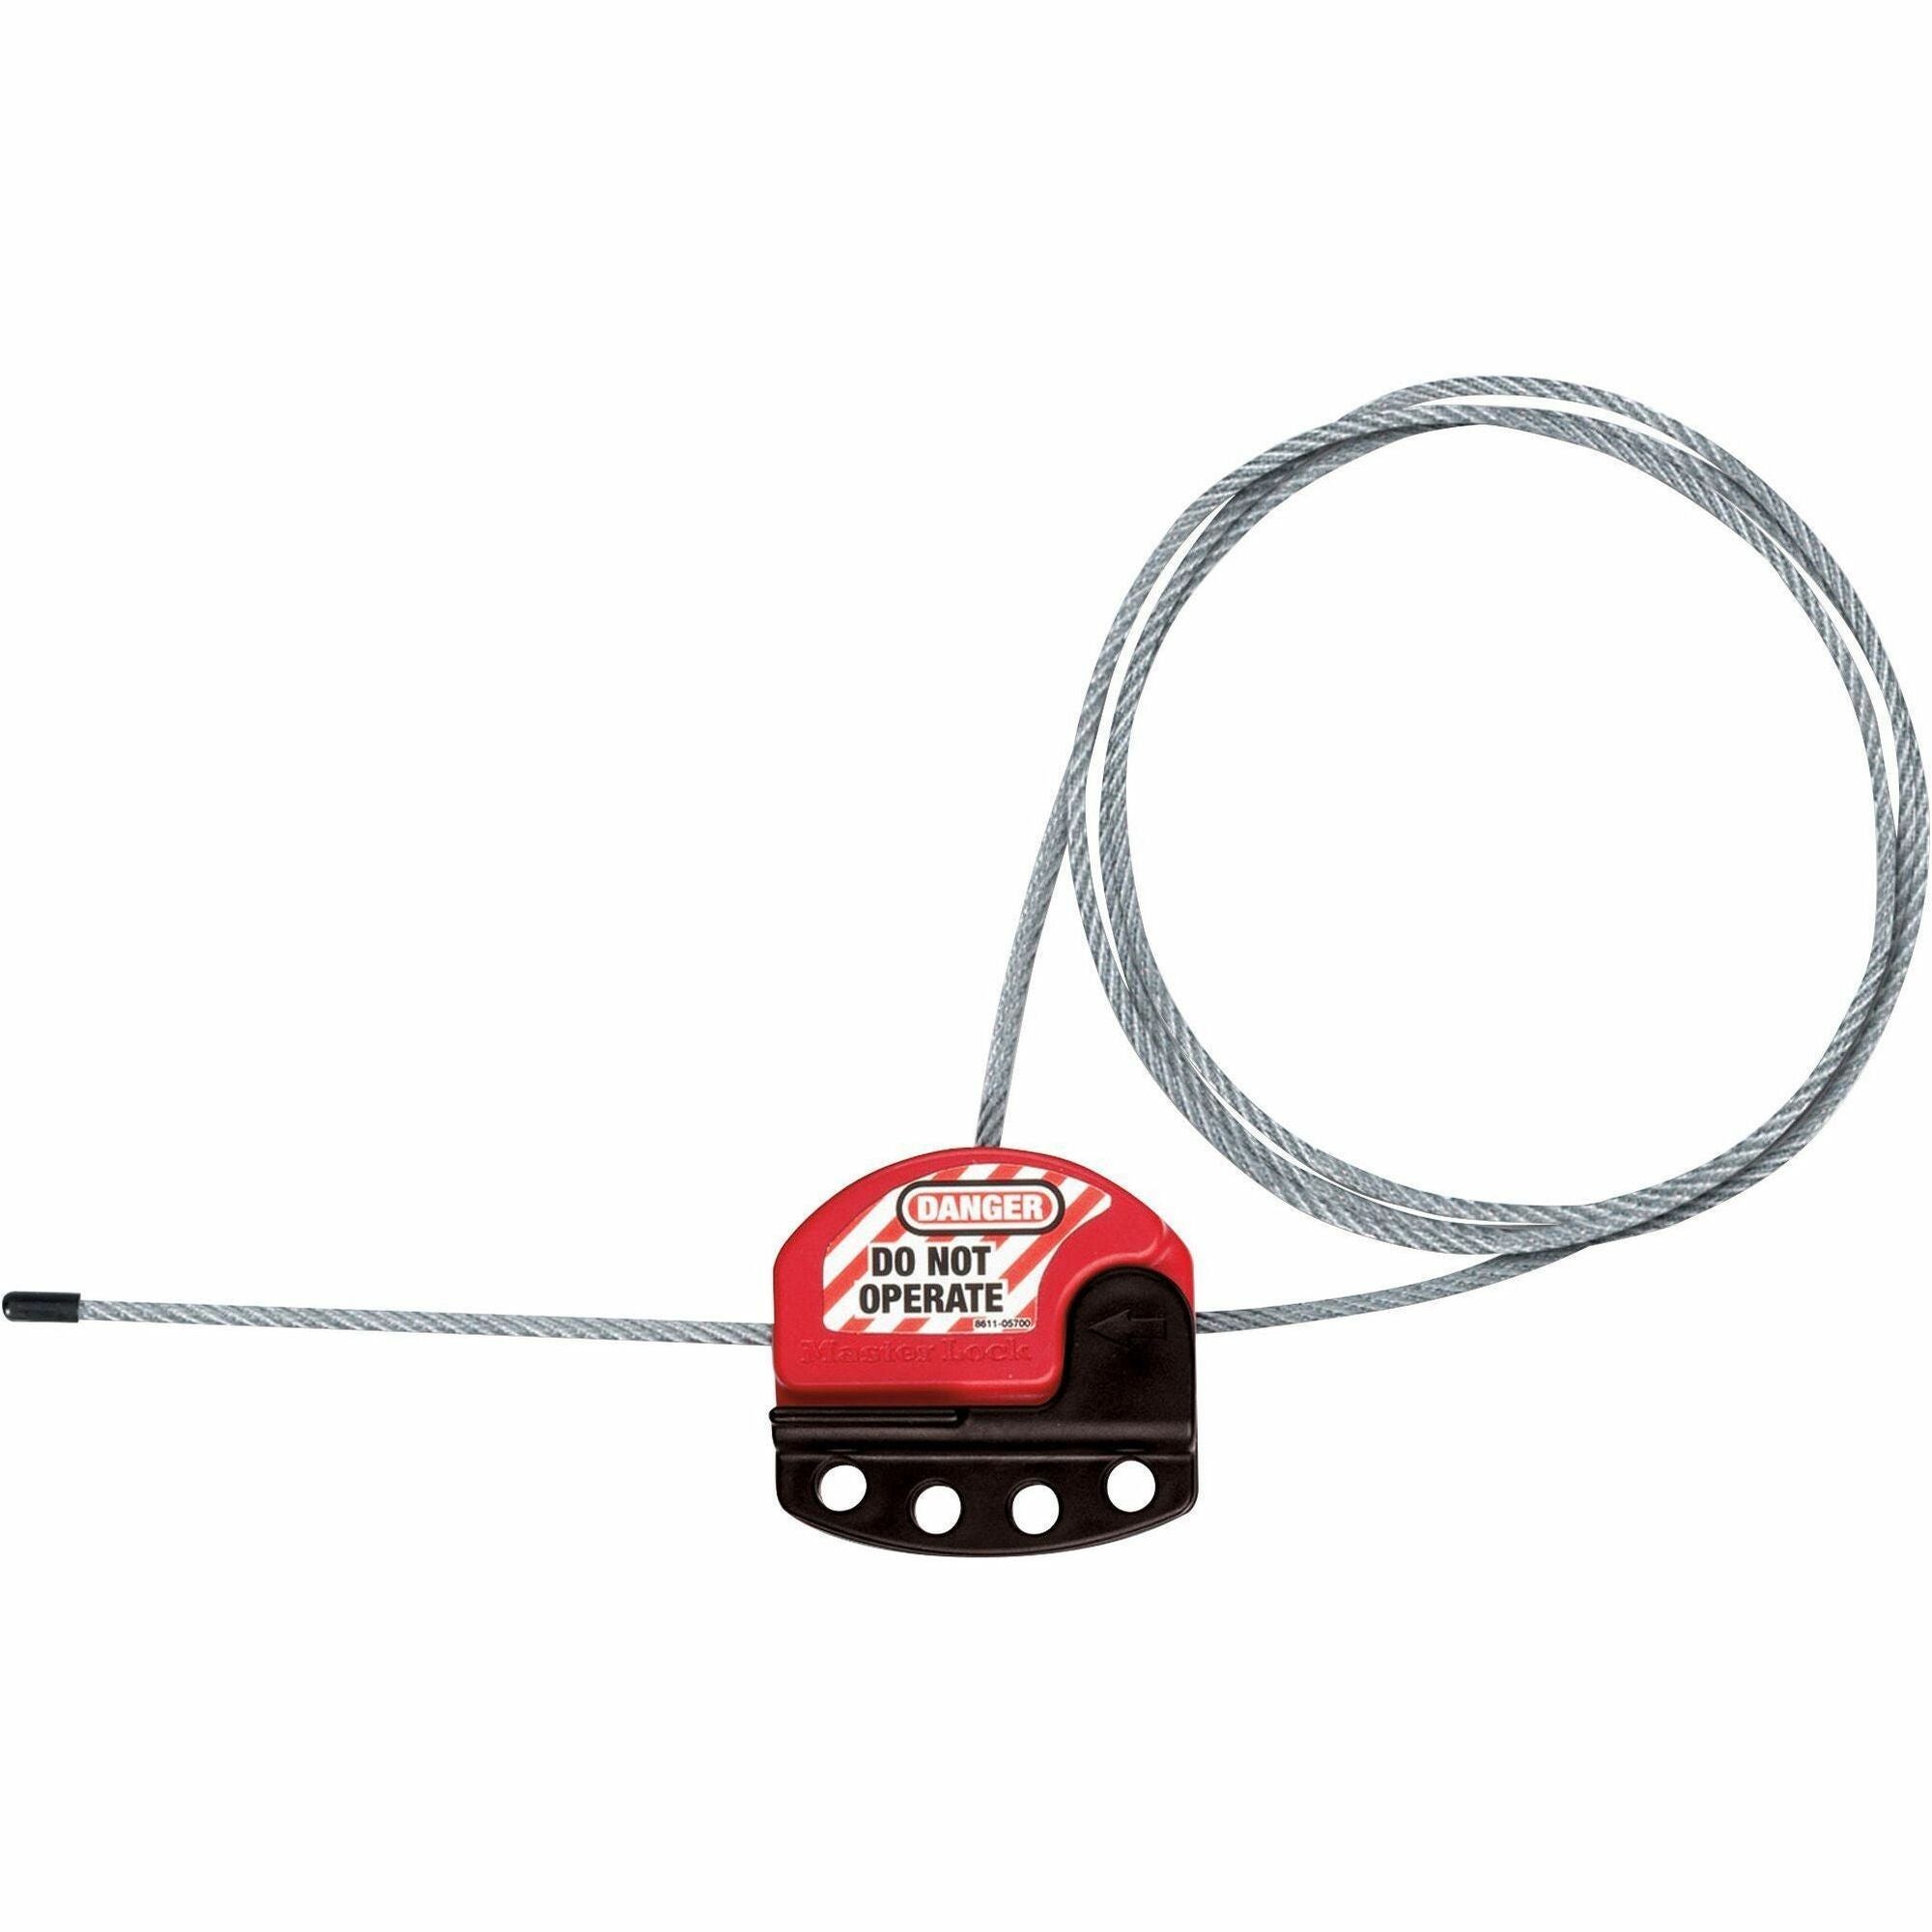 Master Lock Adjustable Cable Lockout - Black, Red - Plastic - 6 ft - 